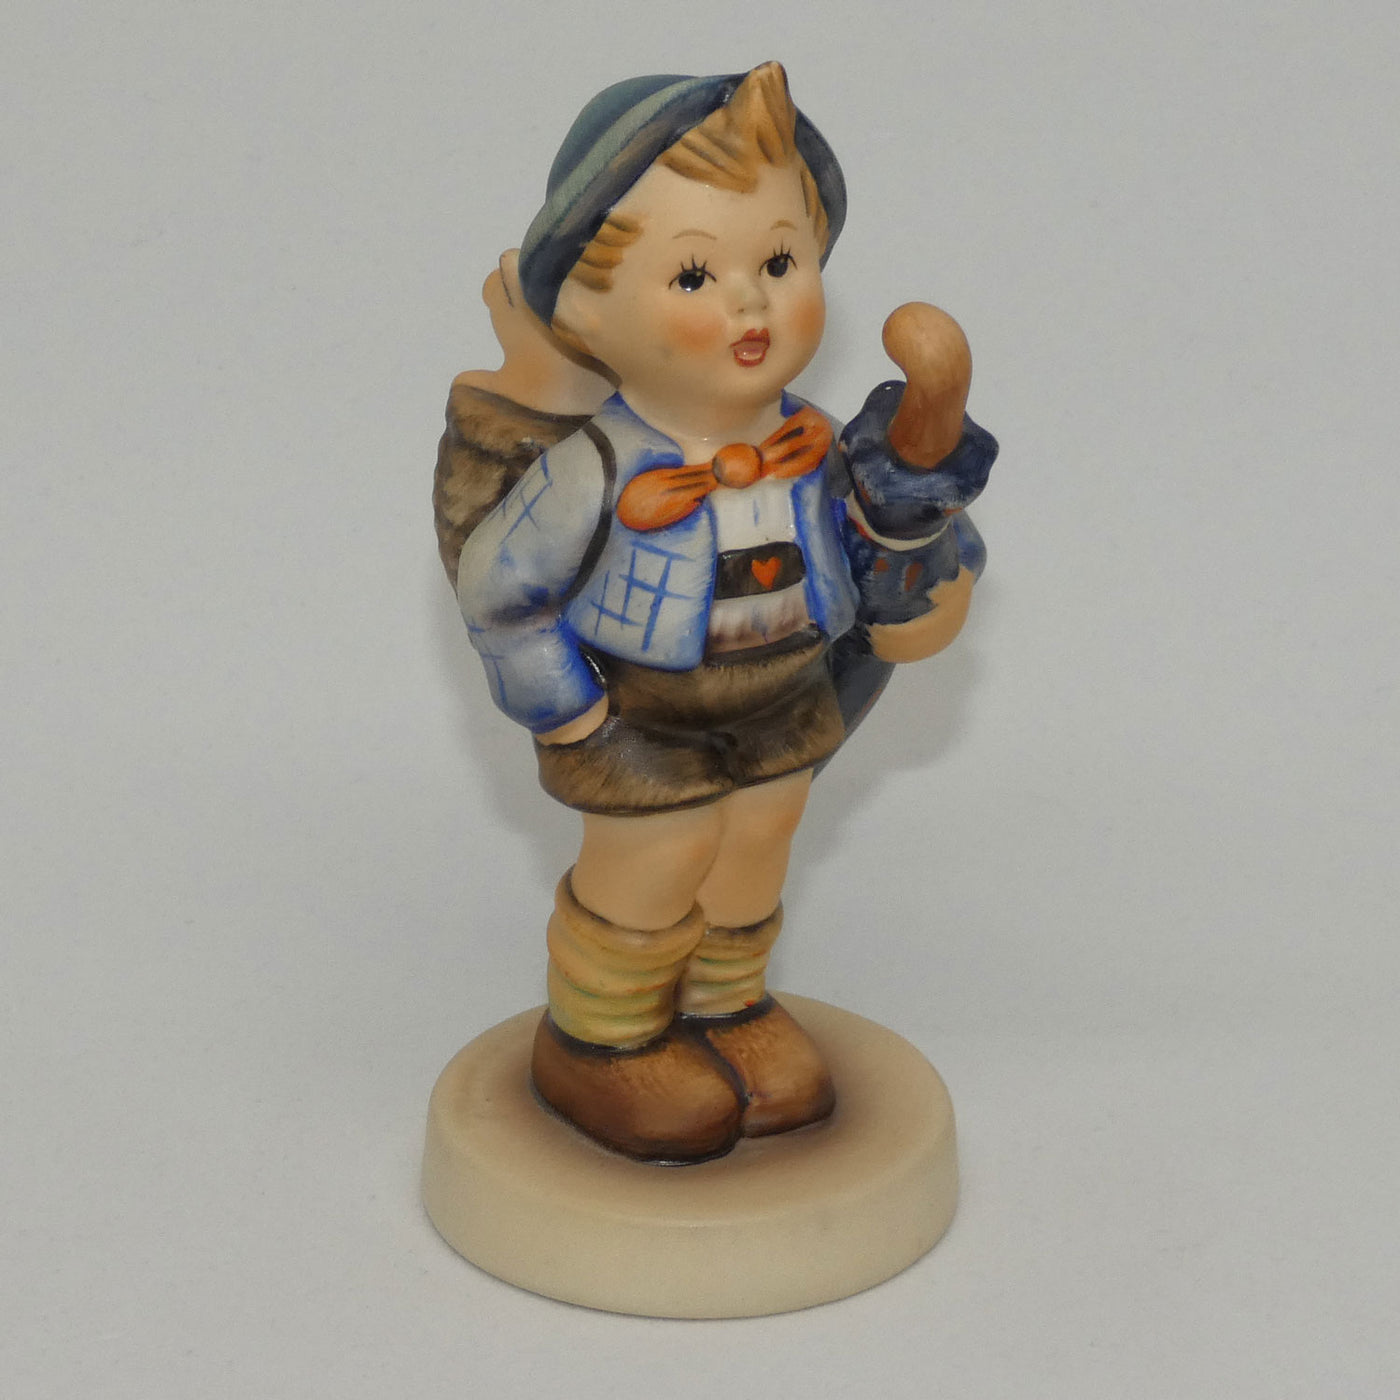 HUM198/2/0 MI Hummel figurine Home From Market Antiques